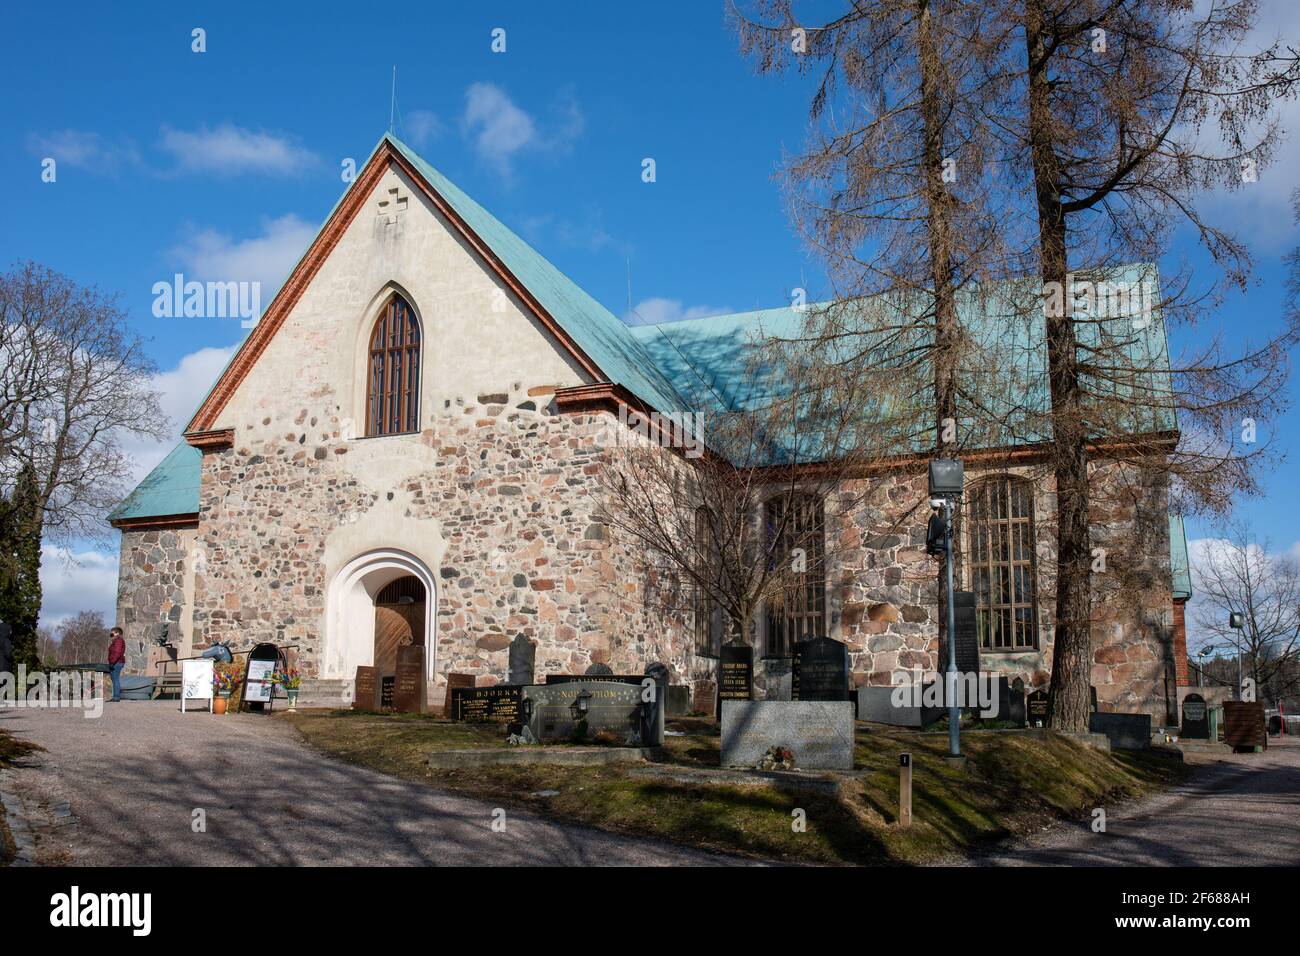 St. Michael's medieval gray stone chuch in Kirkkonummi, Finland Stock Photo